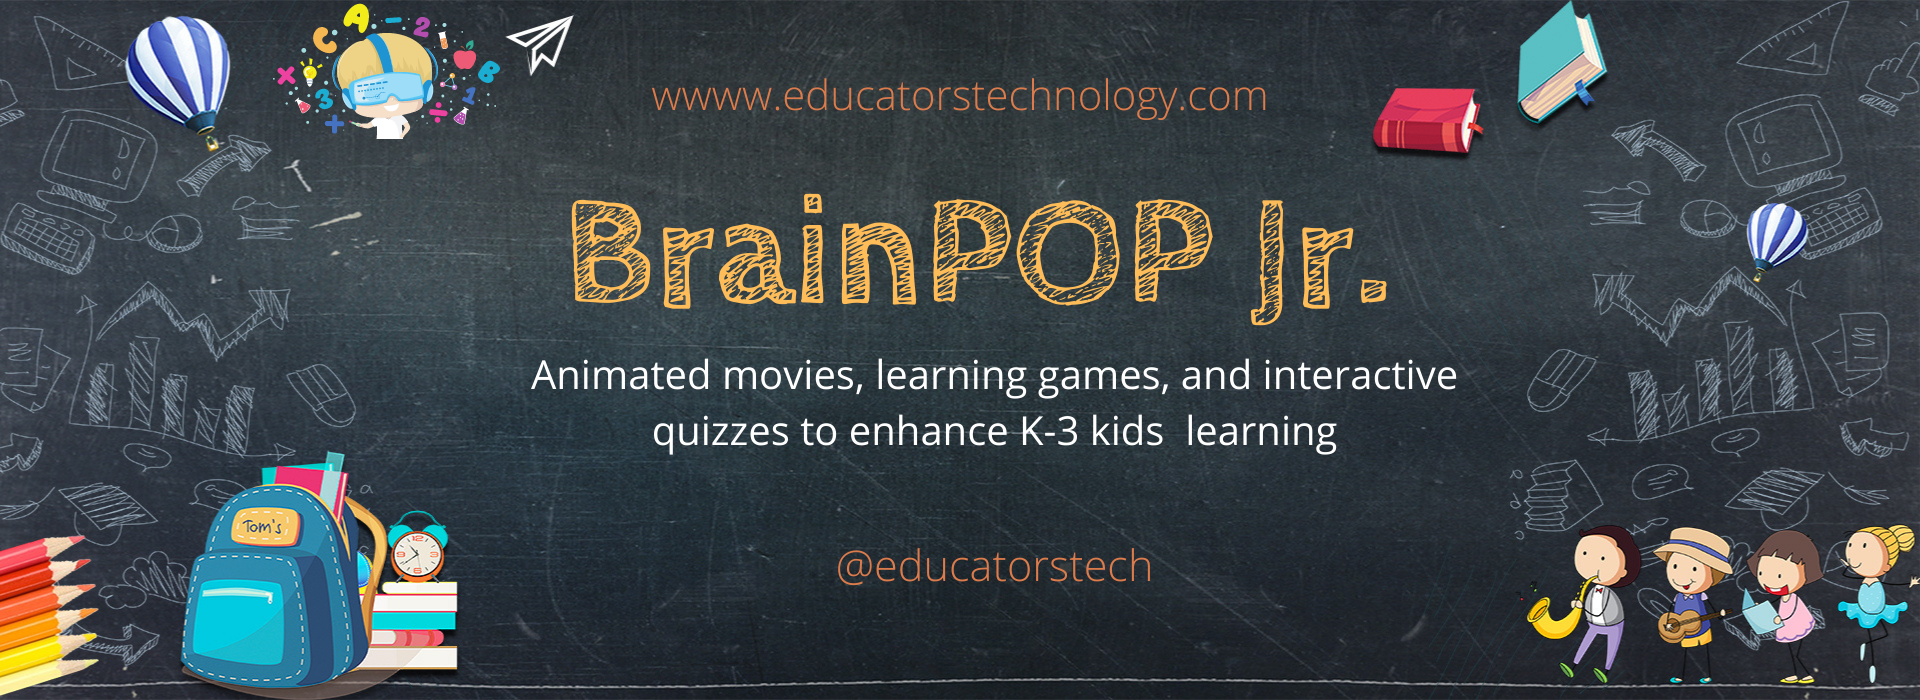 BrainPOP Jr. Review for Educators